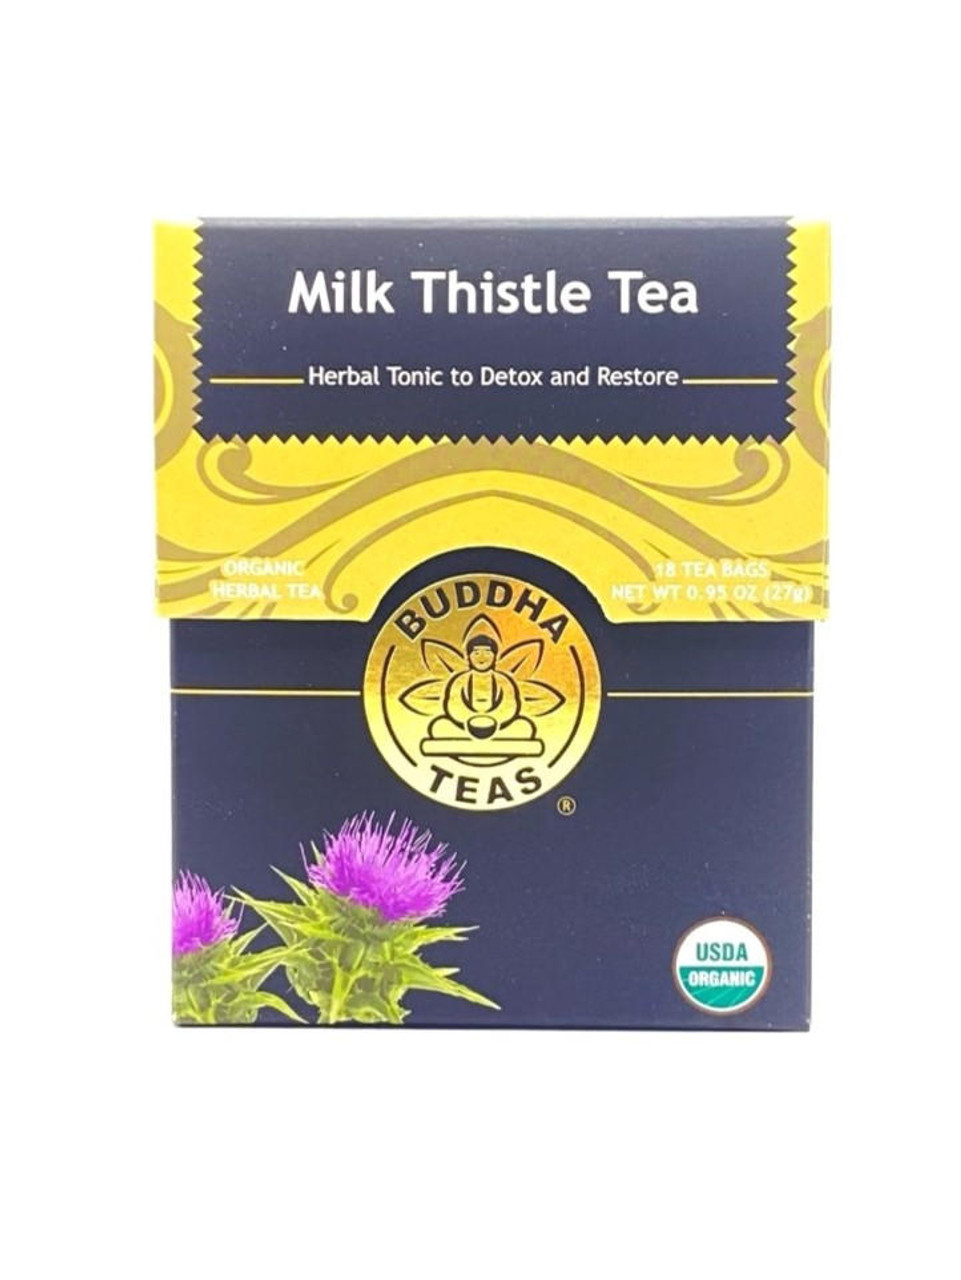 Milk Thistle Tea, 18 bags - Ullman's Health and Beauty